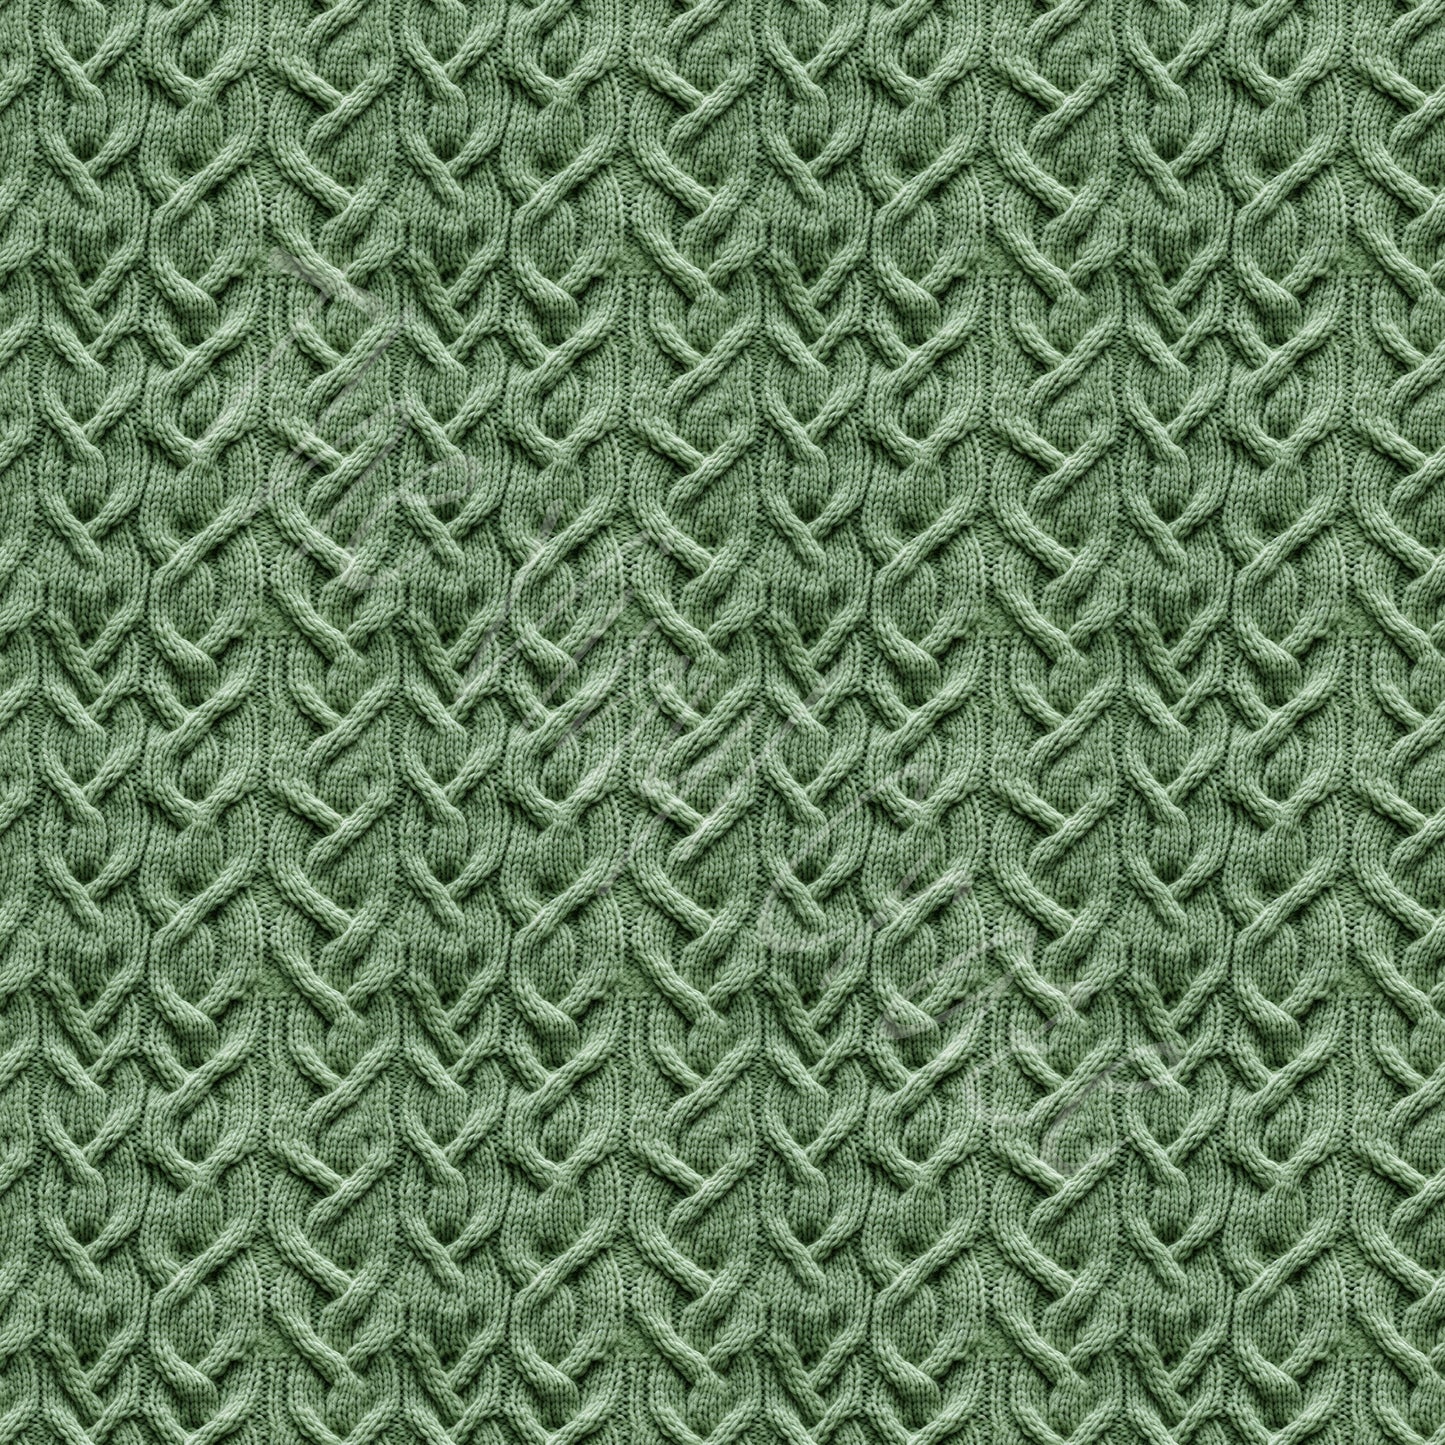 Sweater Textures - 14 Design options